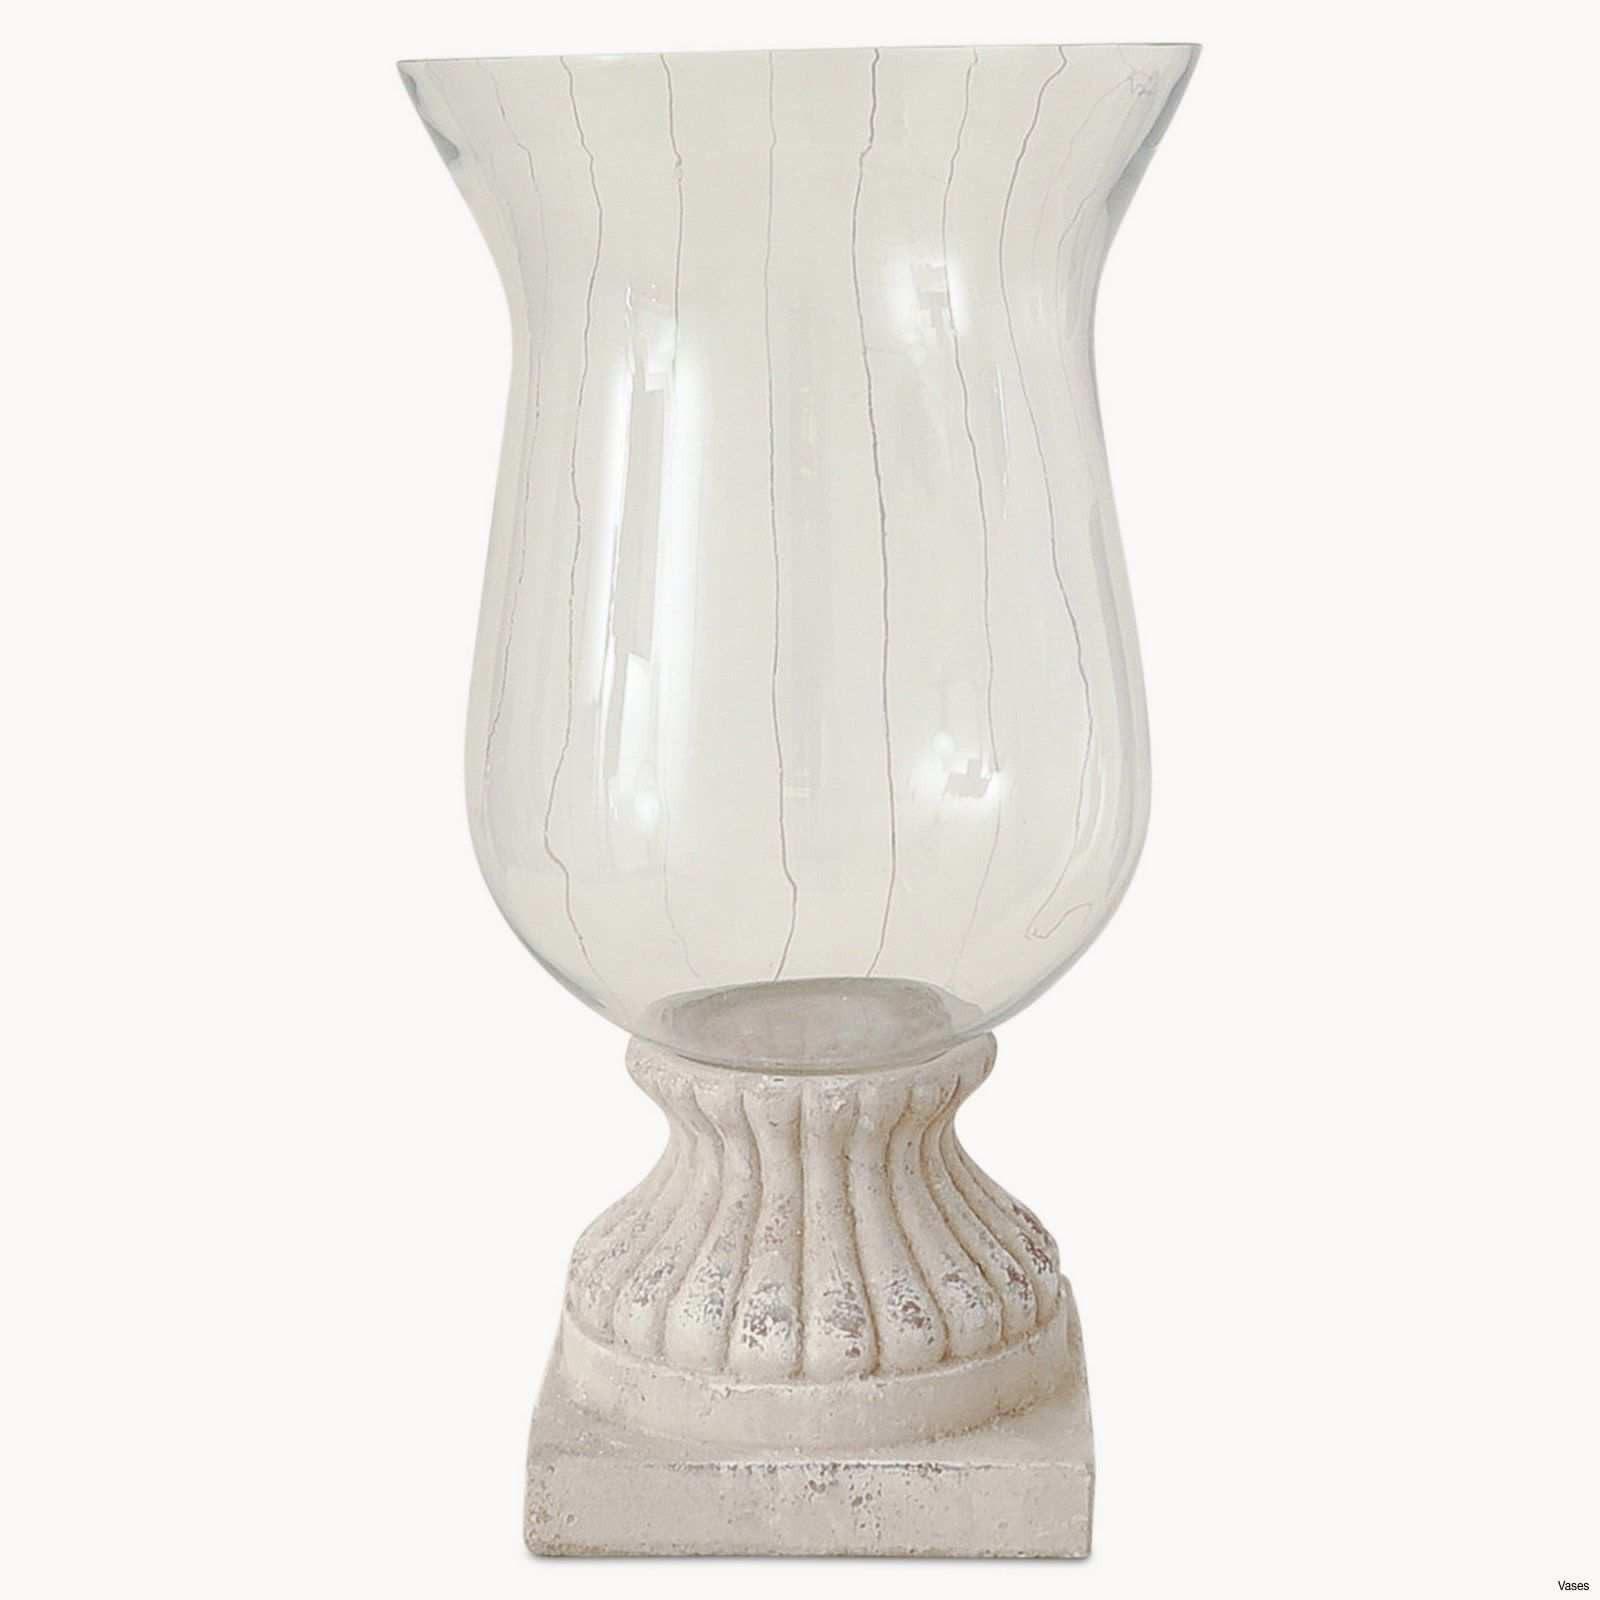 12 Nice Lead Crystal Vase Ebay 2024 free download lead crystal vase ebay of vase light base photos 2012 10 12 09 27 47h vases light up flower with regard to gallery of vase light base